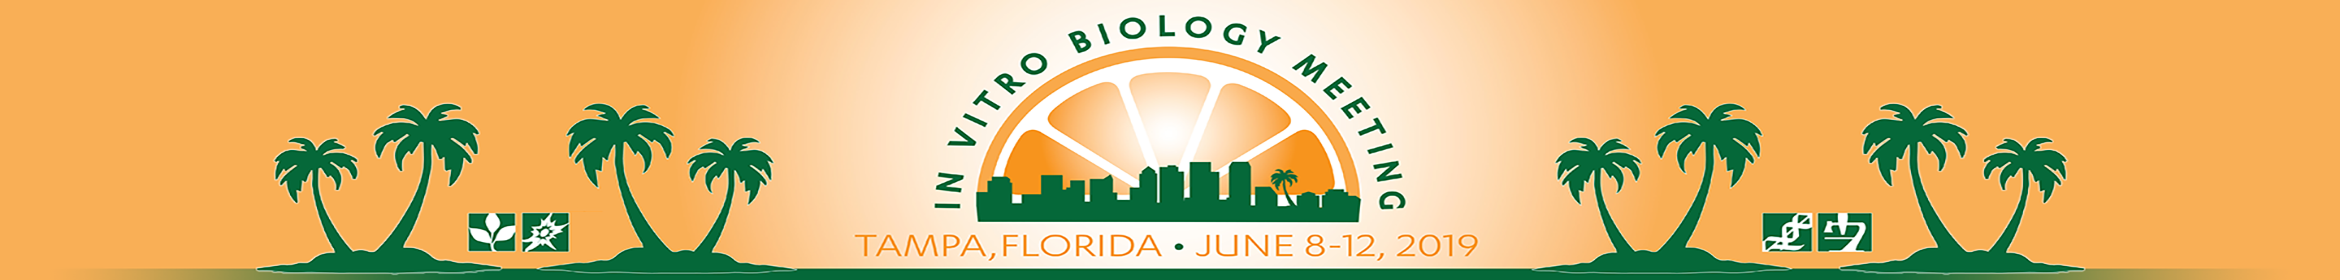 2019 In Vitro Biology Meeting Main banner